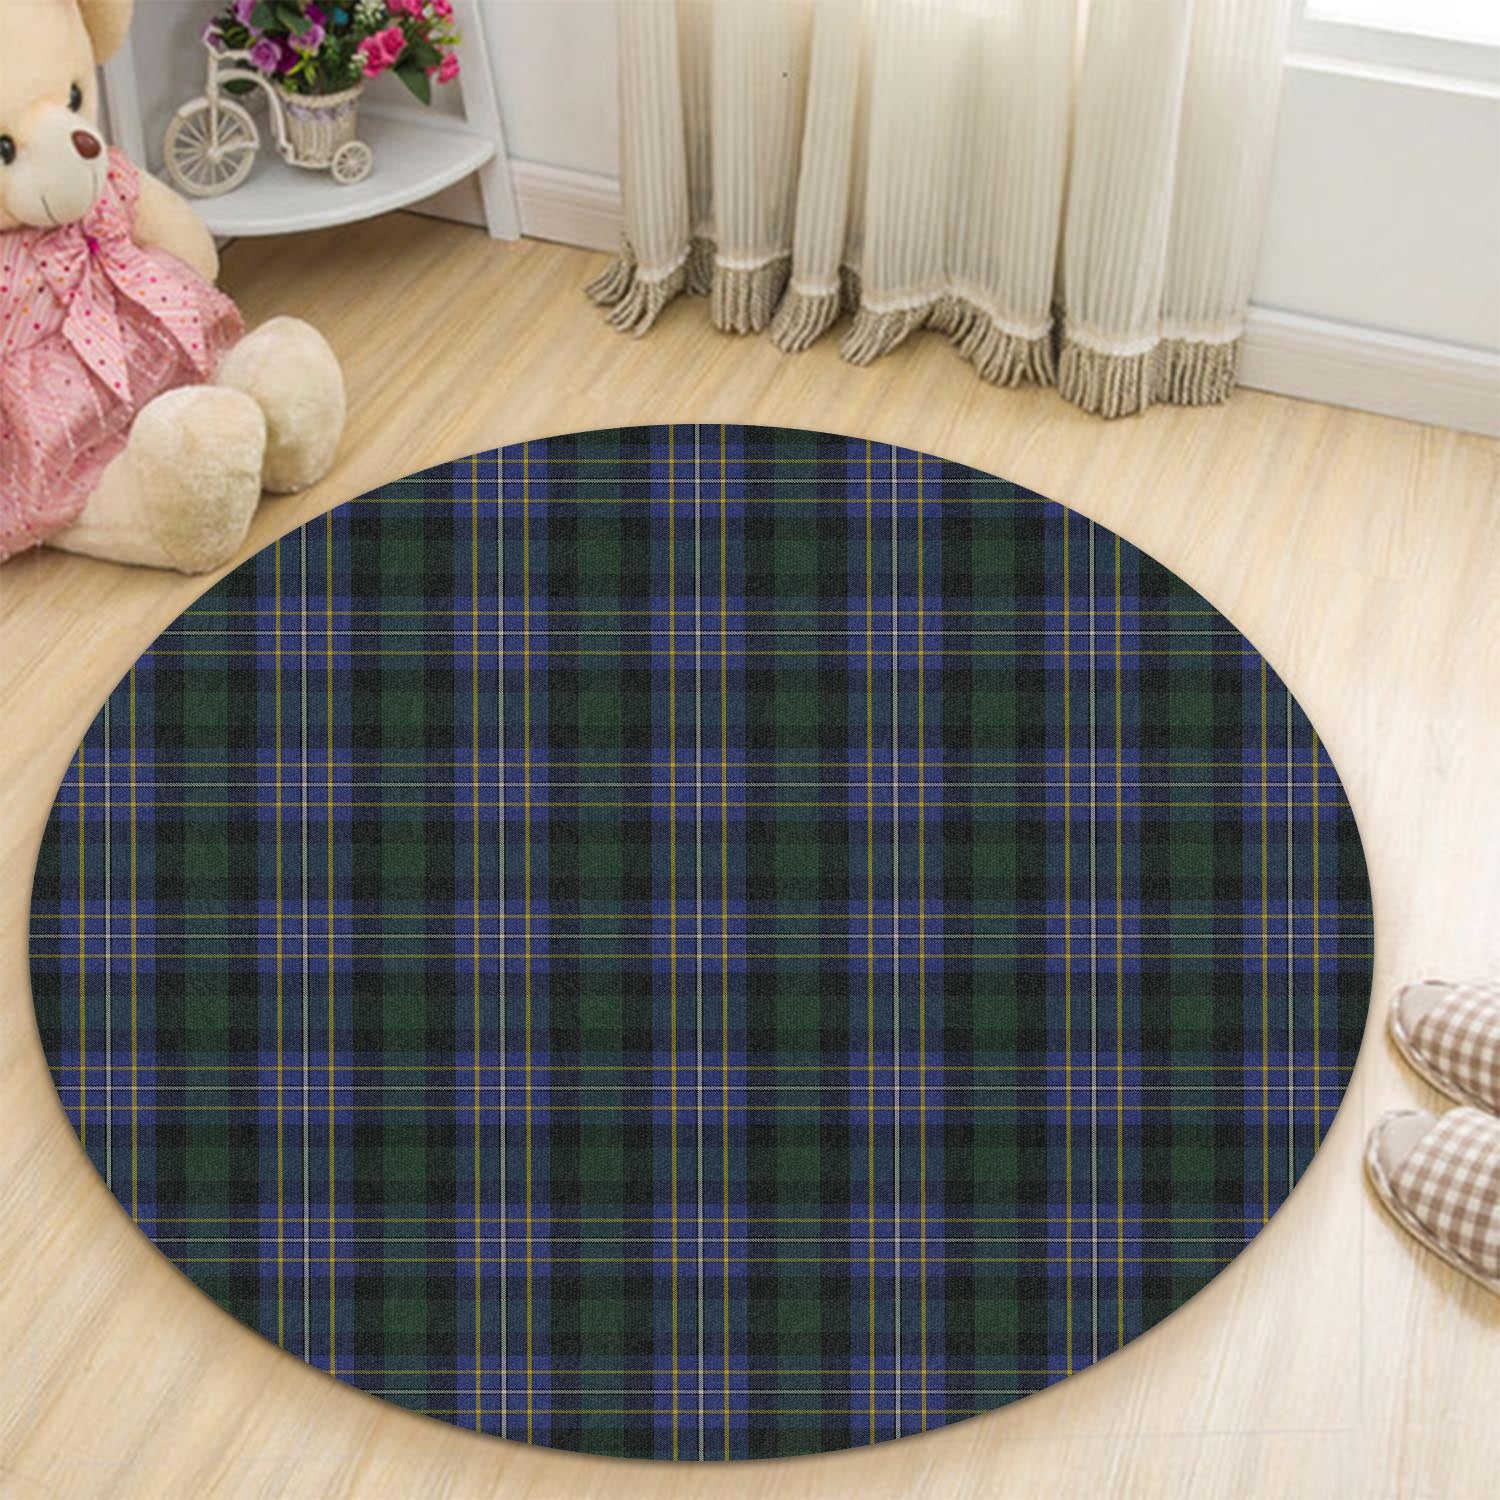 hughes-tartan-round-rug